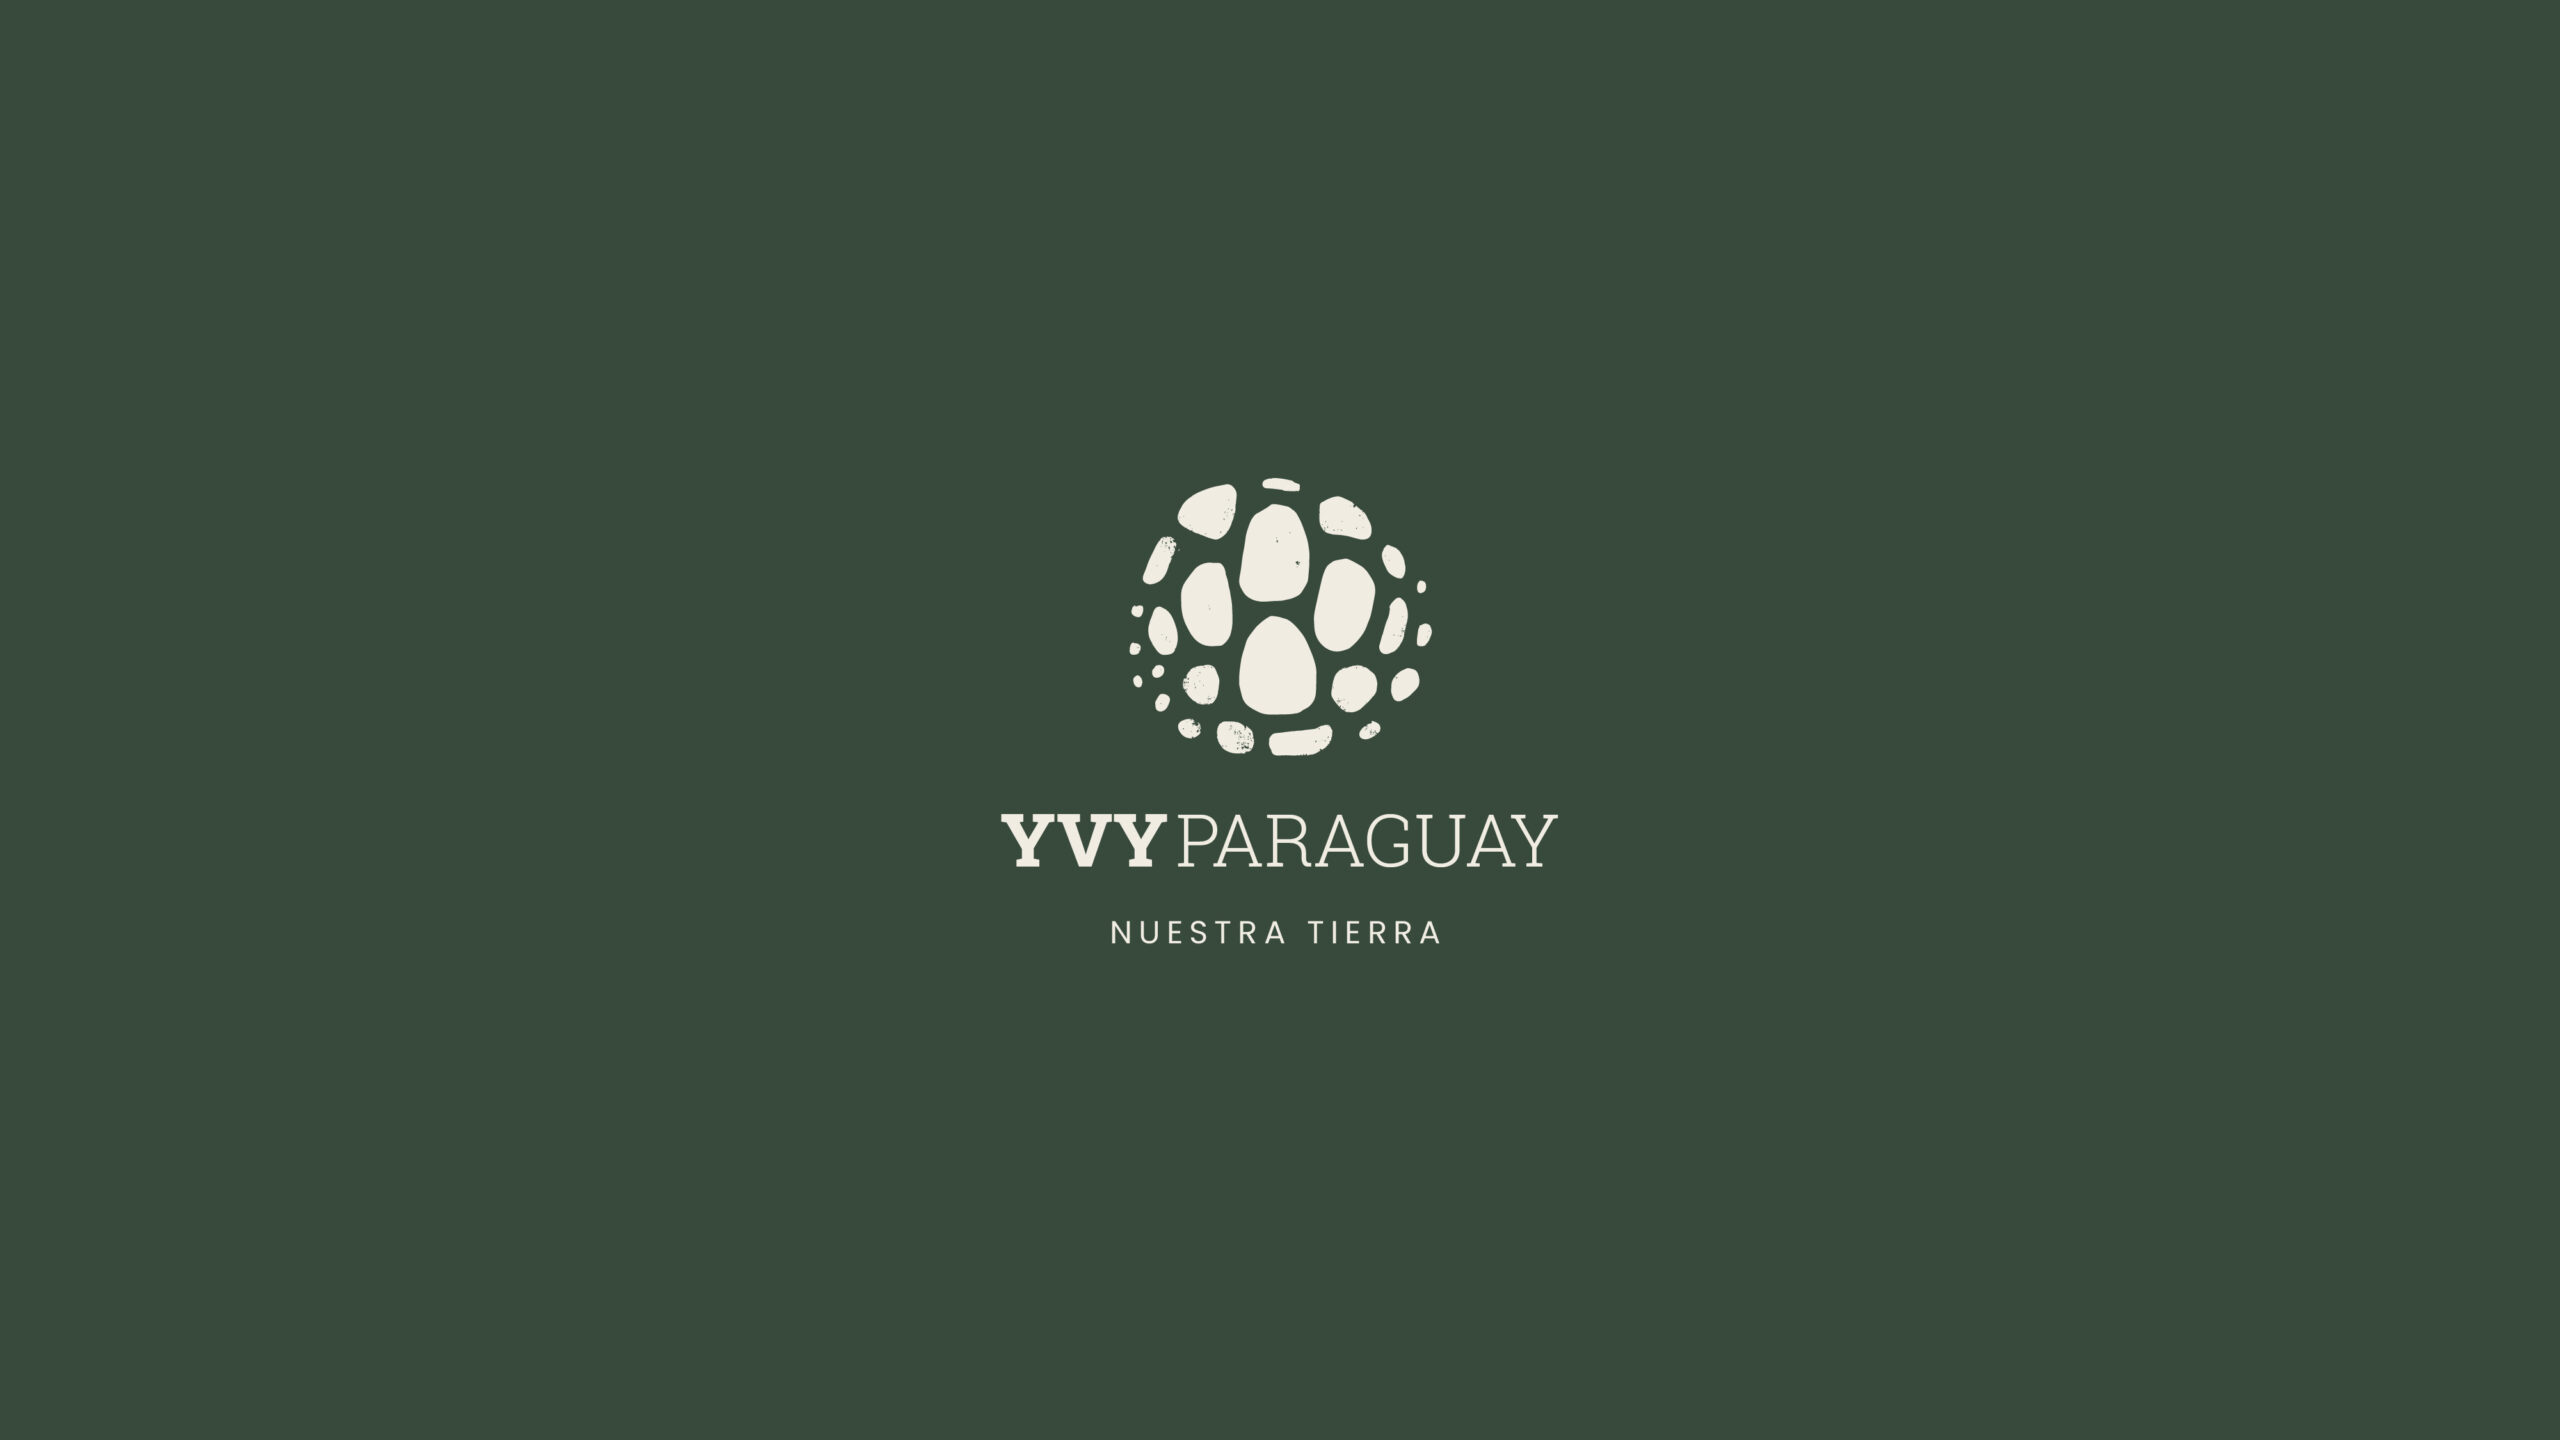 Magia_YVY Paeaguay_Portfolio-01